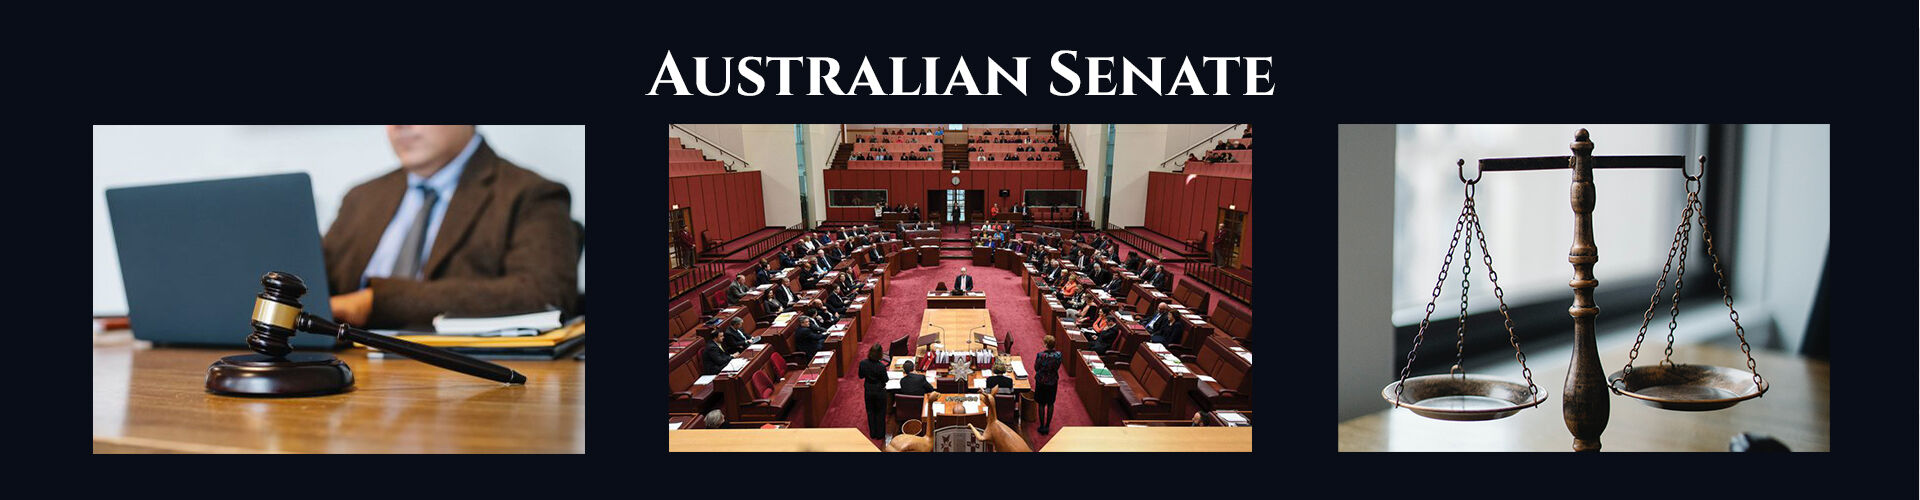 Absent Justice - Australian Senate